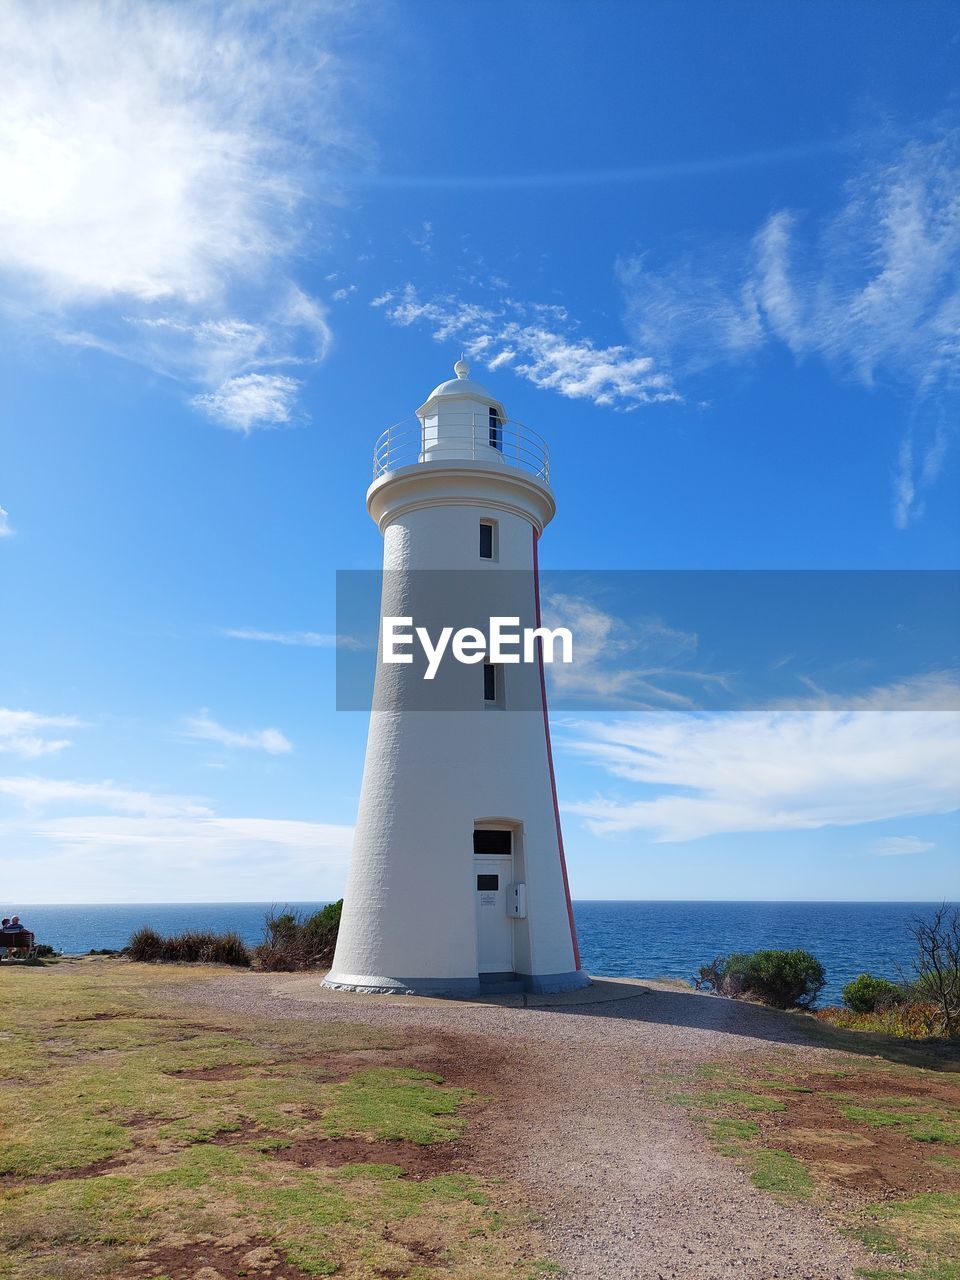 Mersey bluff lighthouse located in devonport, tasmania.